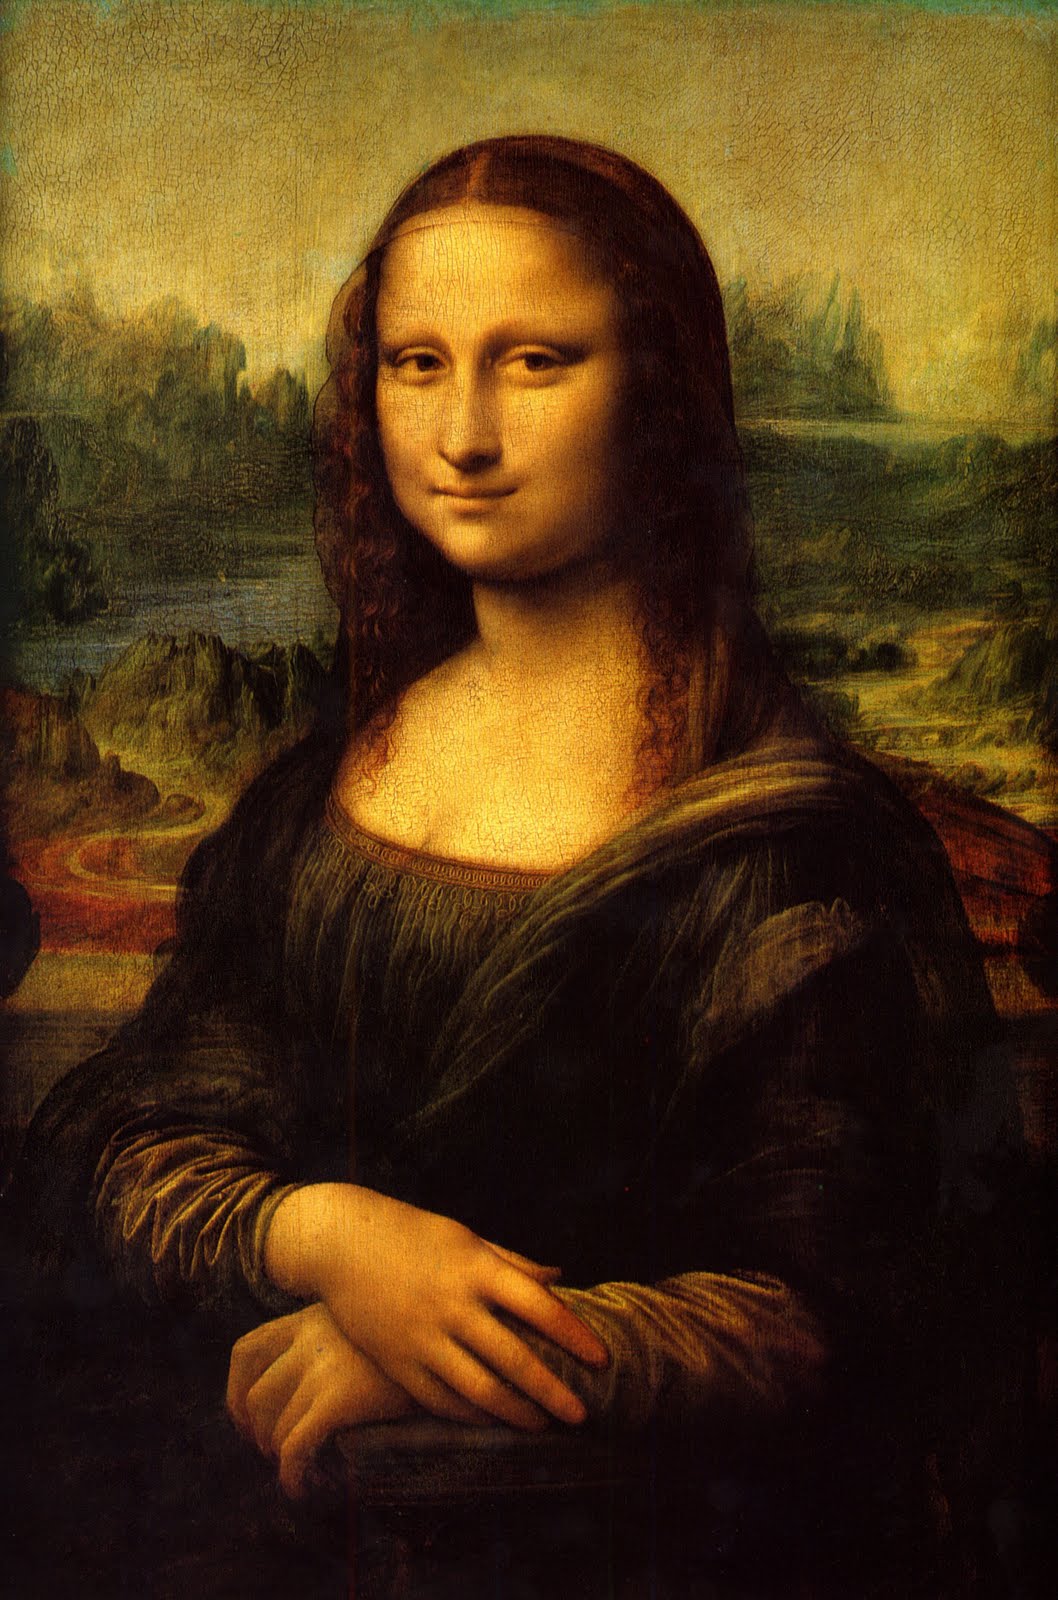 Da Vinci Paints Drawings HD Wallpaper Download Free Wallpapers ...